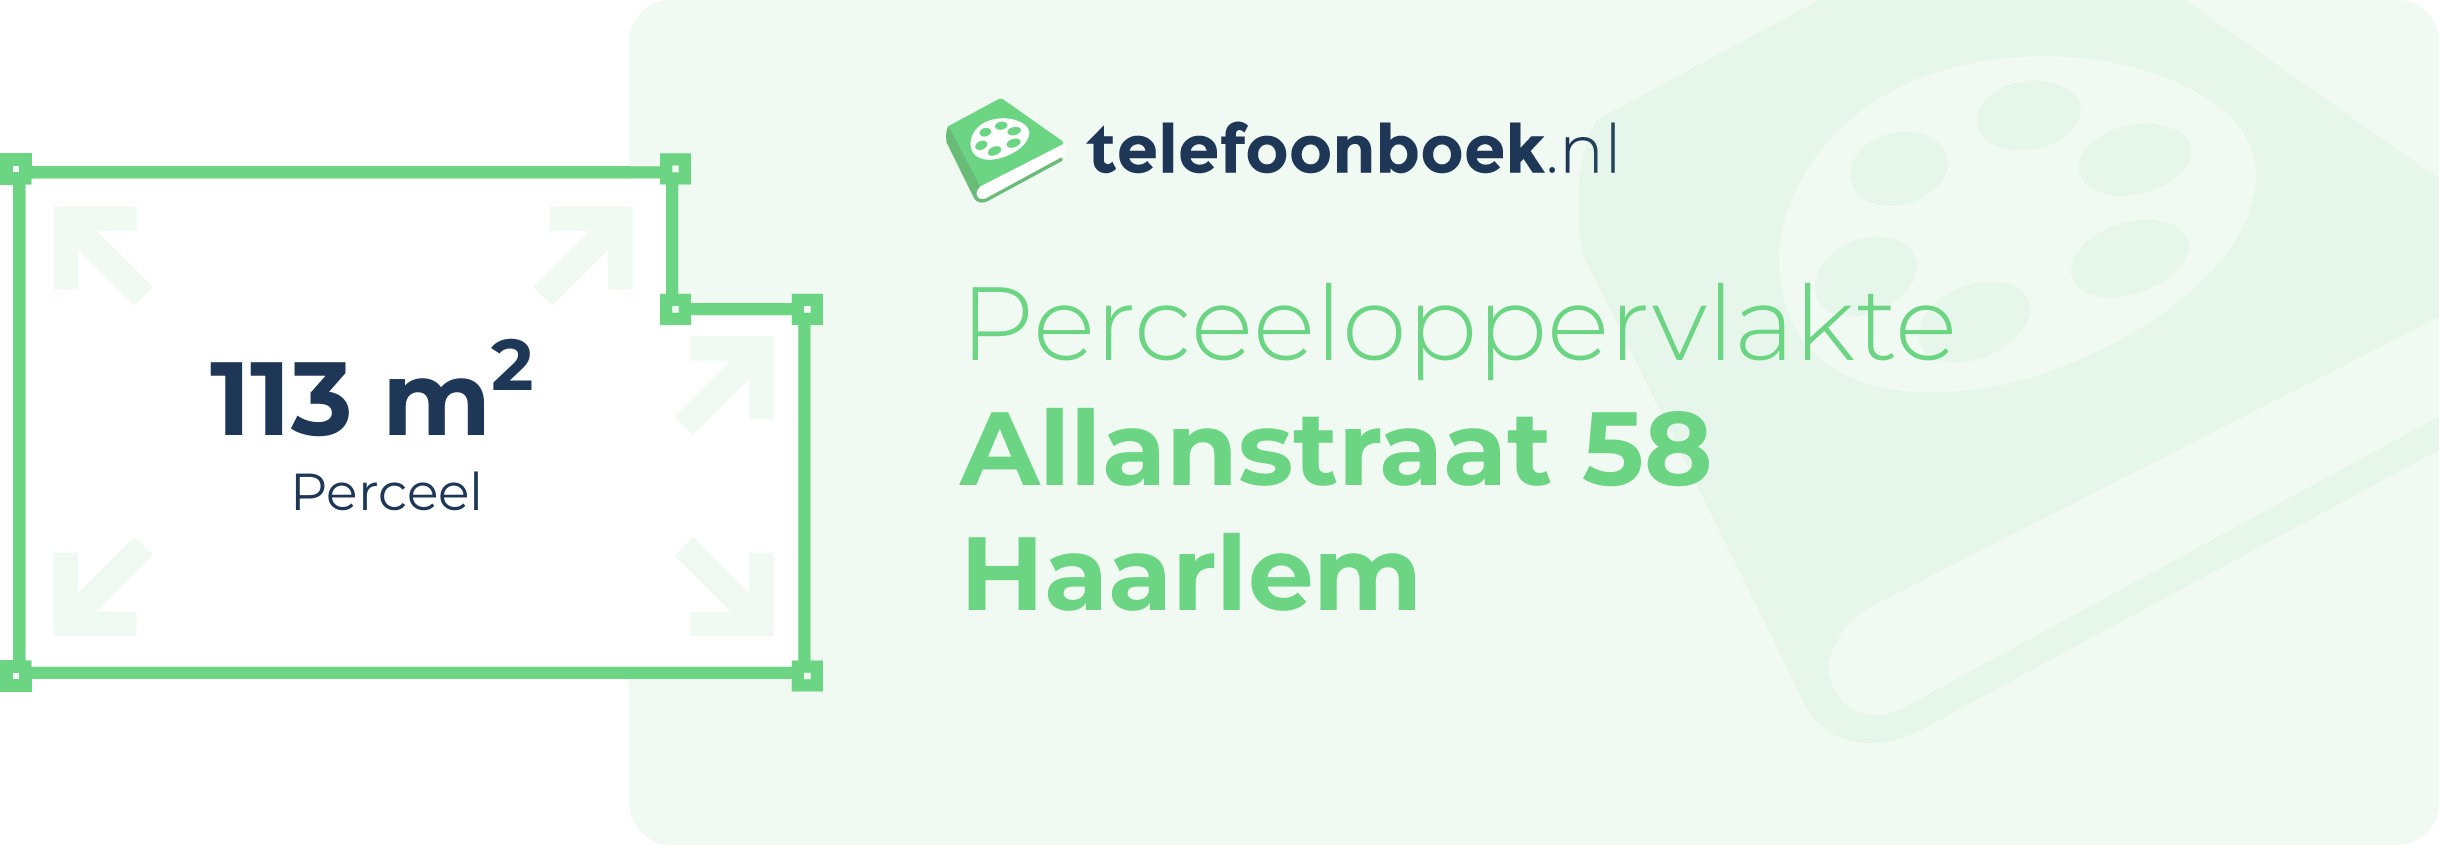 Perceeloppervlakte Allanstraat 58 Haarlem